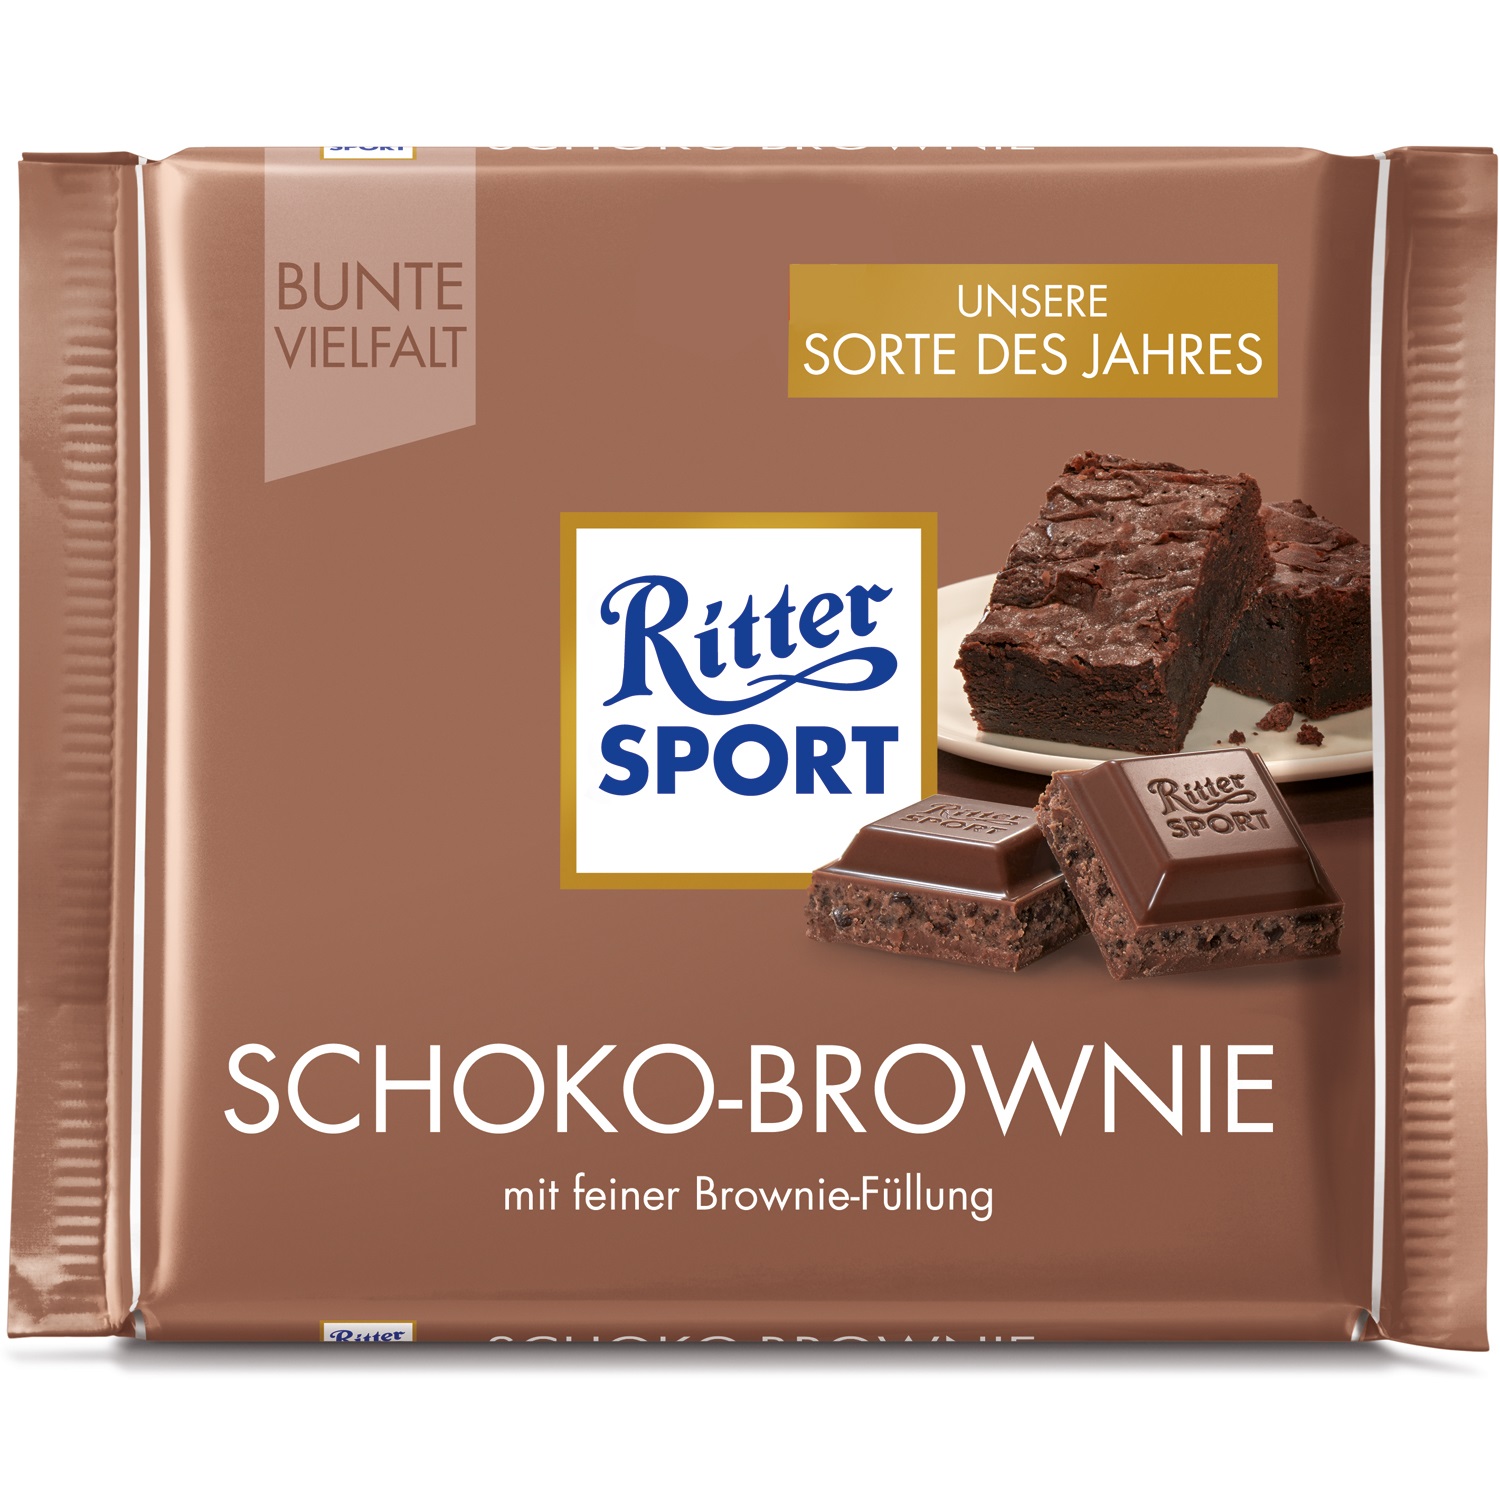 Шоколадка ритер. Ritter Sport Брауни. Риттер спорт шоколад Германия. Немецкий шоколад Ritter Sport. Ritter Sport шоколад темный 50%.